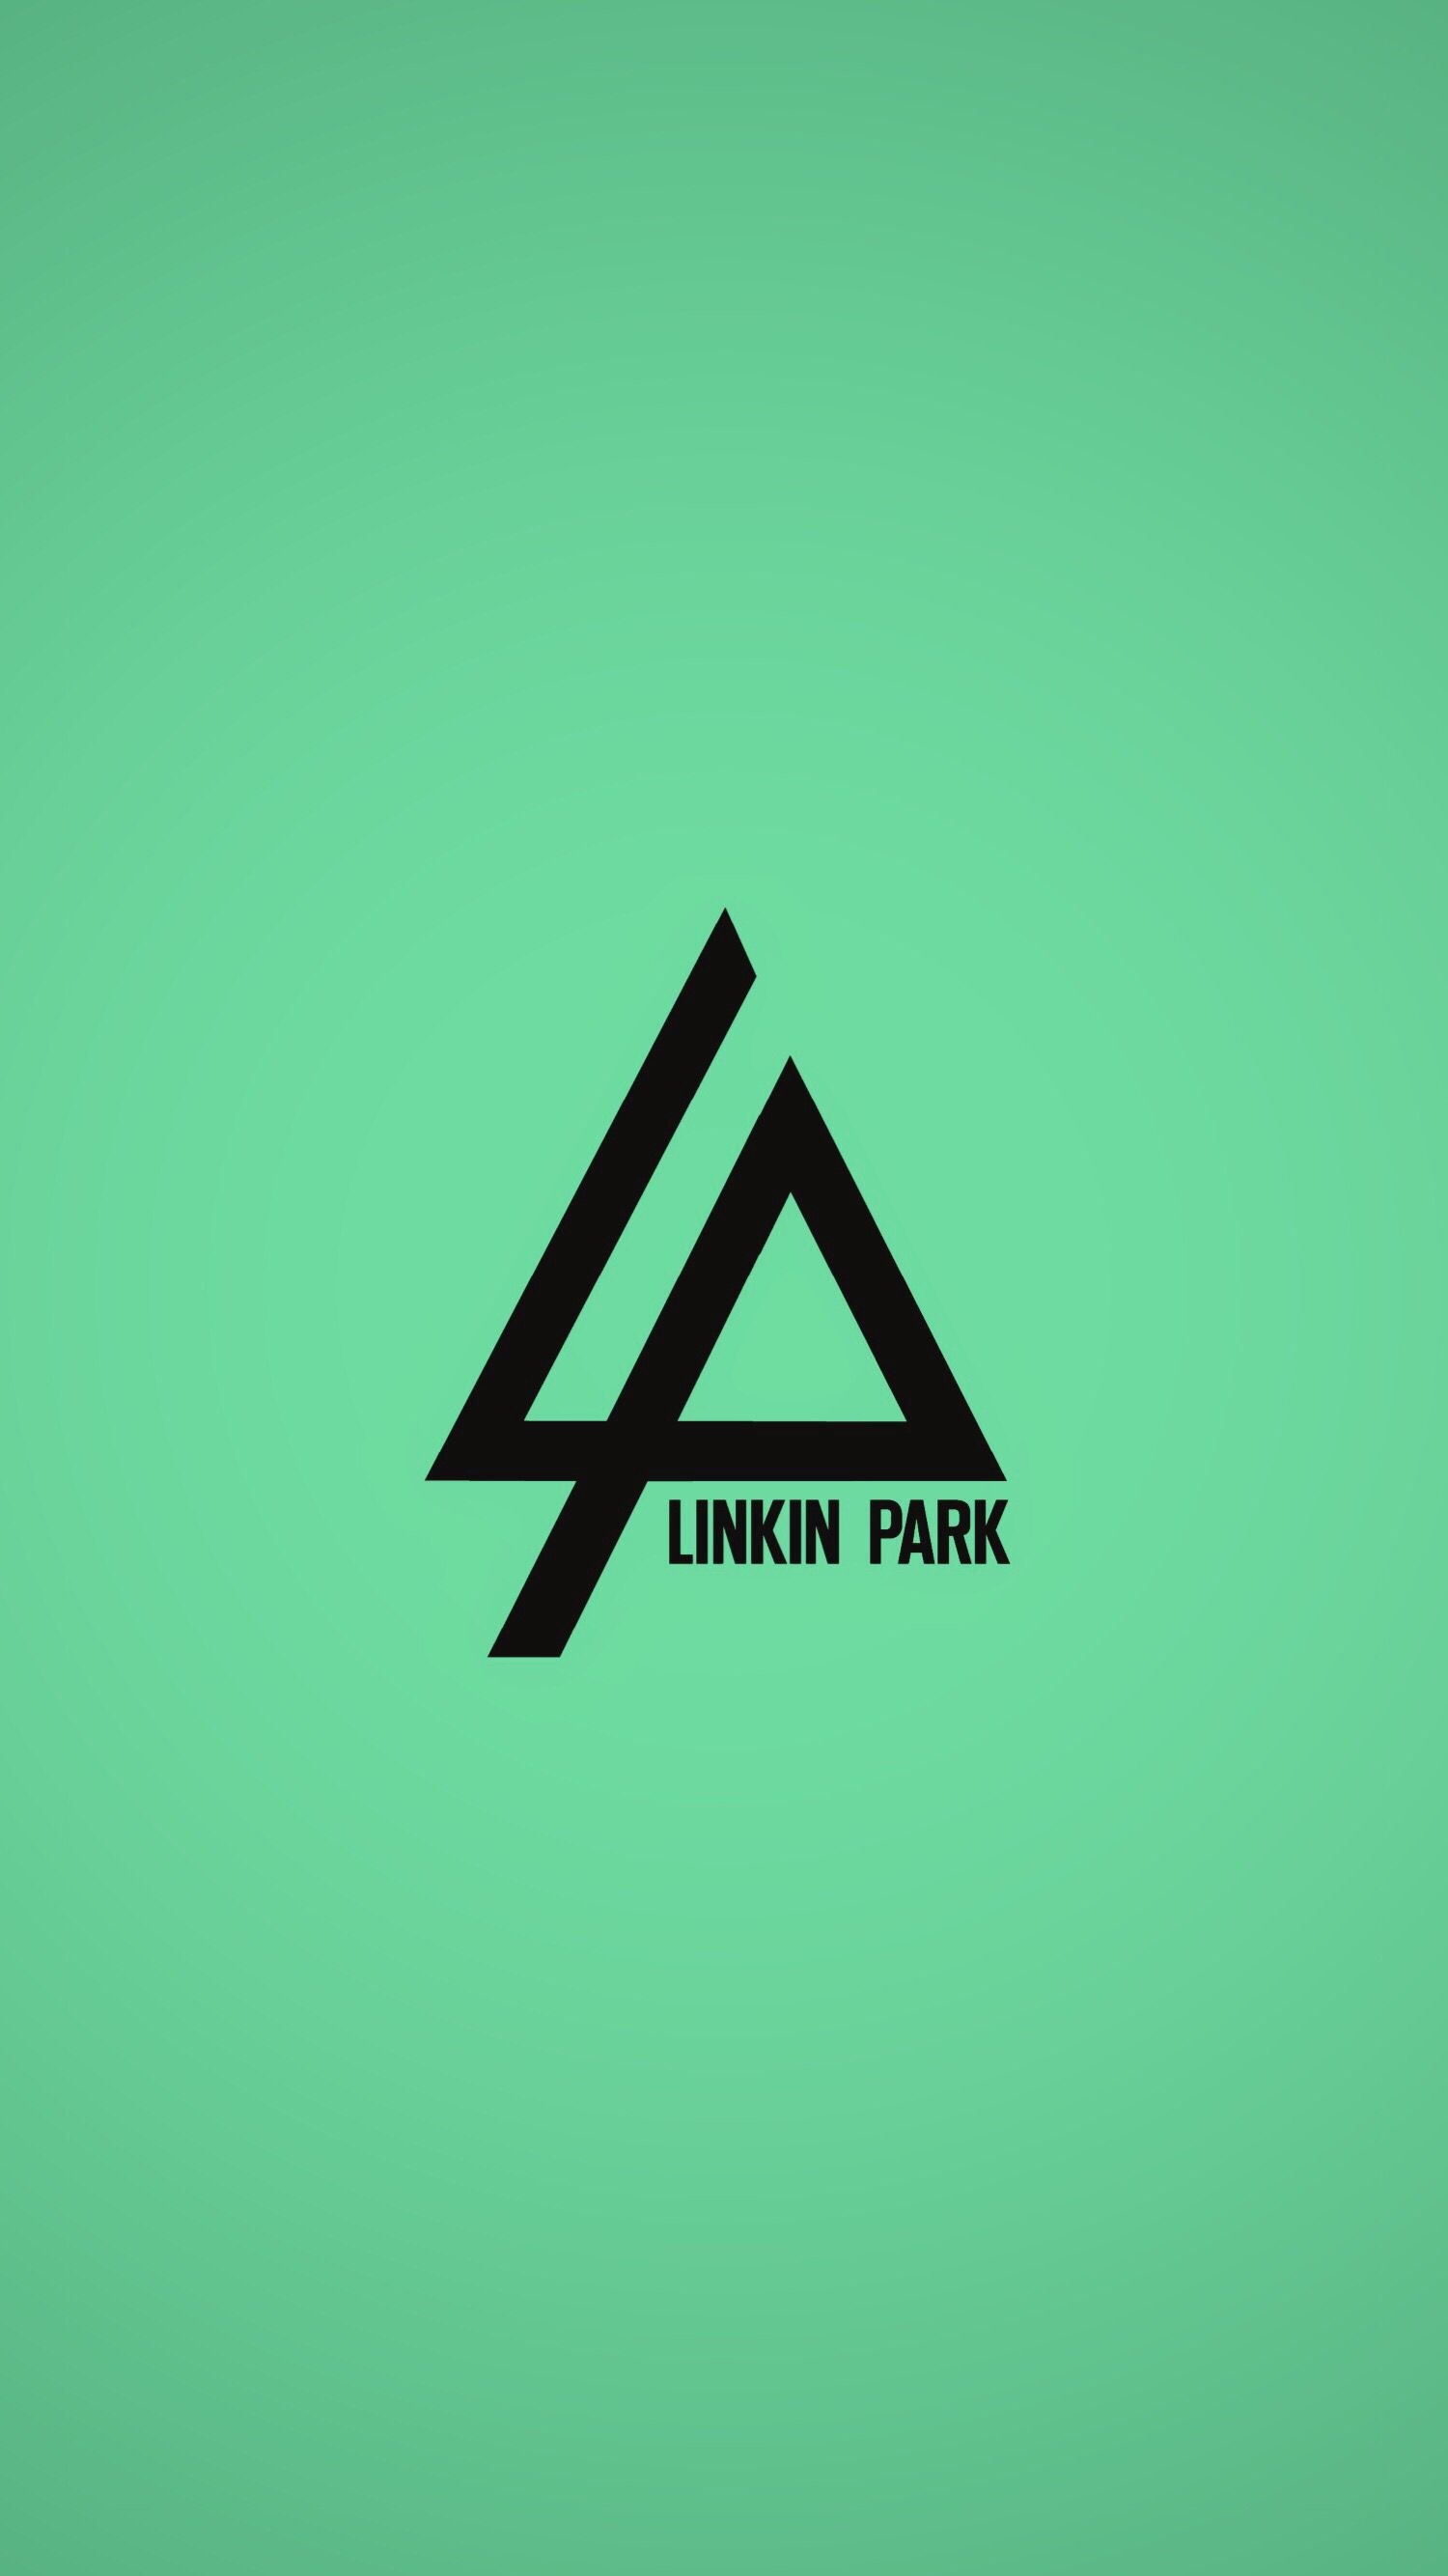 LP logo Wallpaper #linkinpark #mikeshinoda | Linkin park, Linkin park logo, Sassy wallpaper 1500x2670